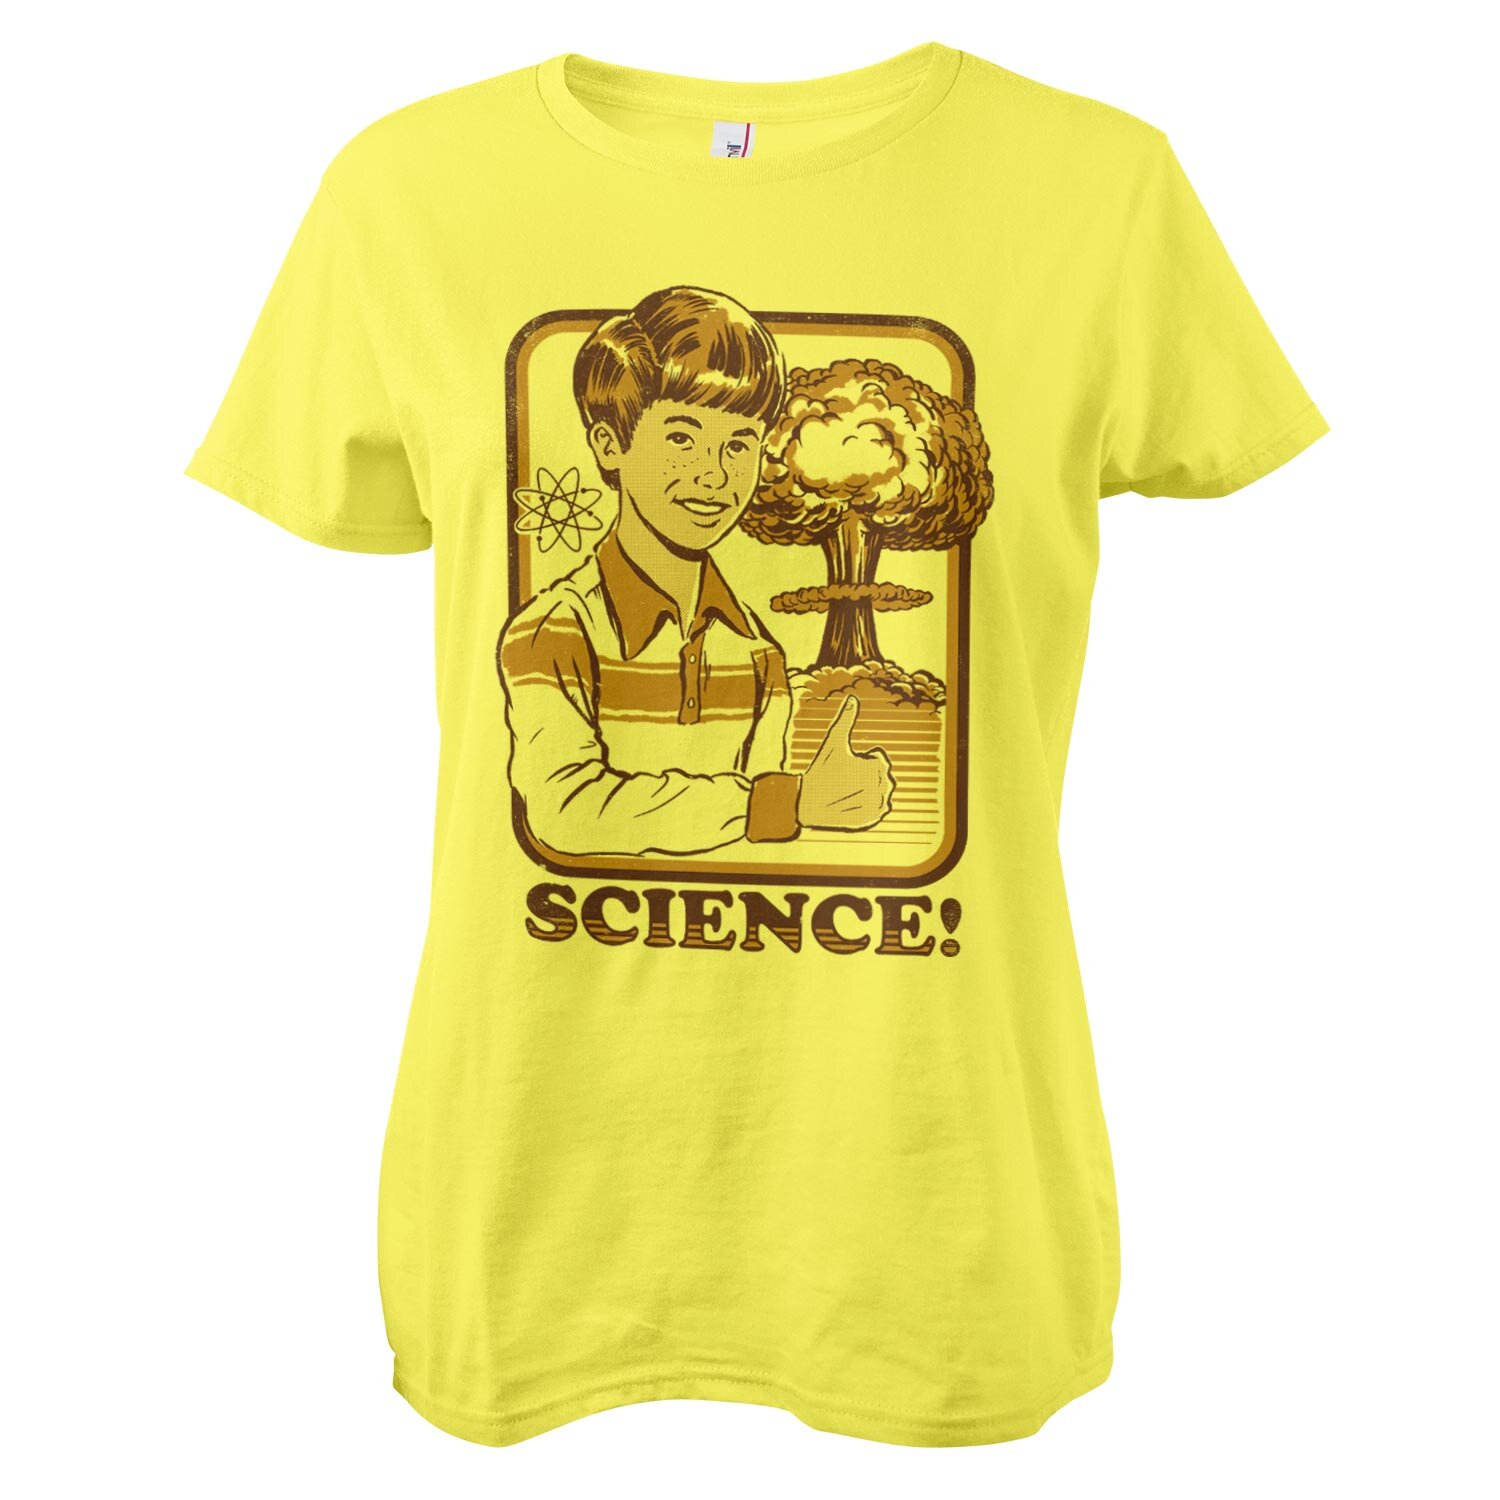 Science! Girly Tee